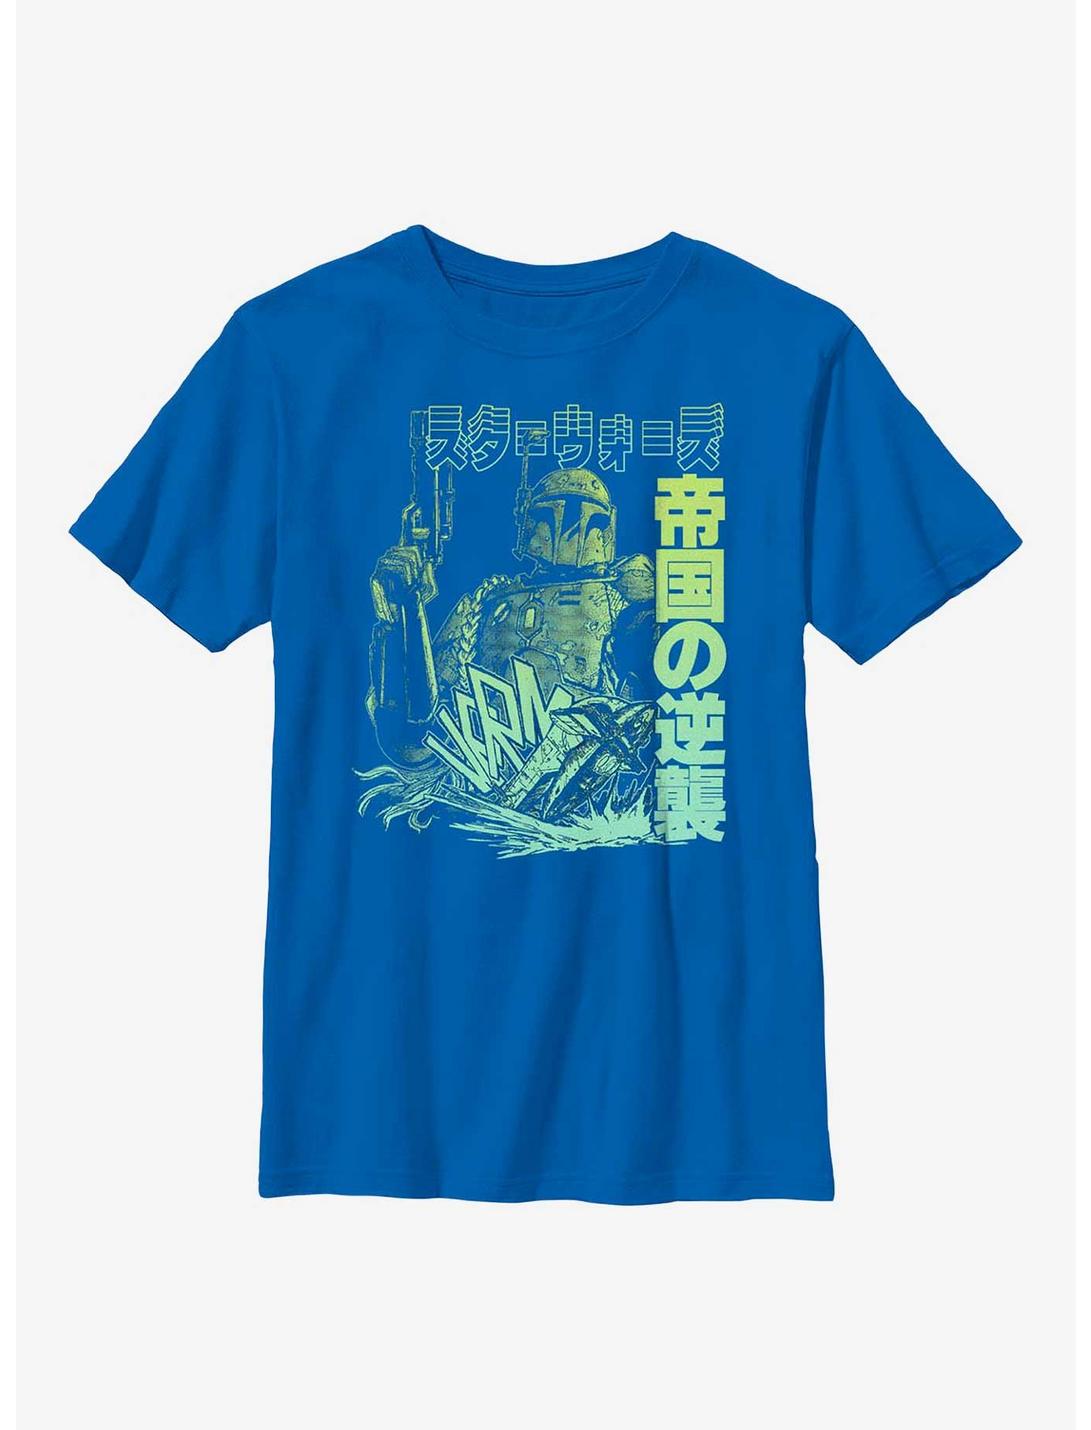 Star Wars Boba Fett Empire Strikes Back in Japanese Youth T-Shirt, ROYAL, hi-res